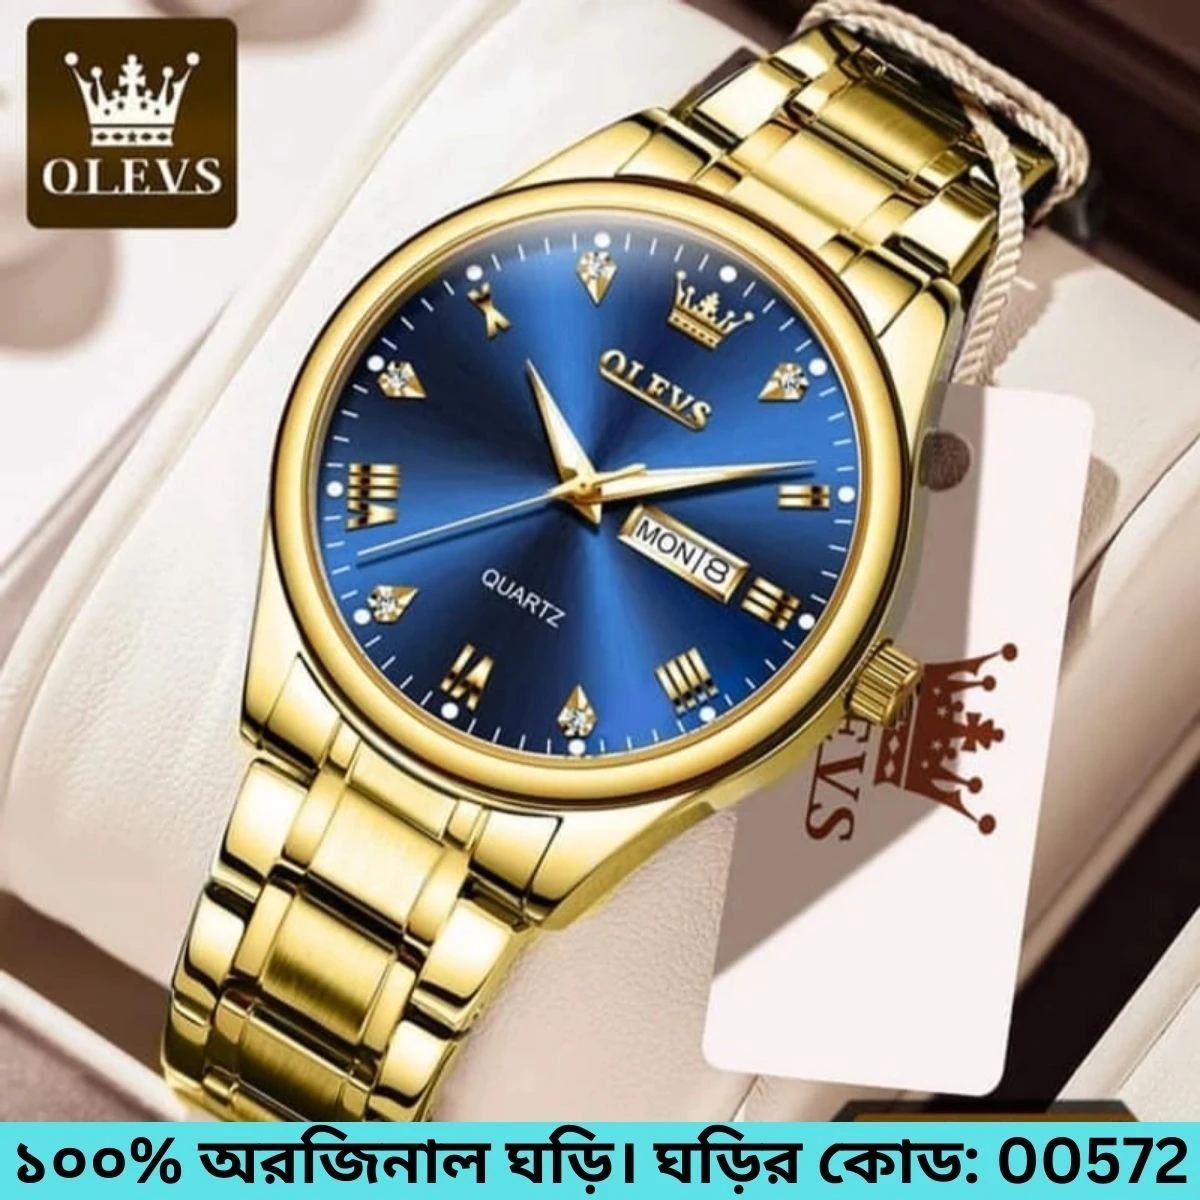 LIGE Smartwatch BW0256 Price in Bangladesh | Diamu.com.bd